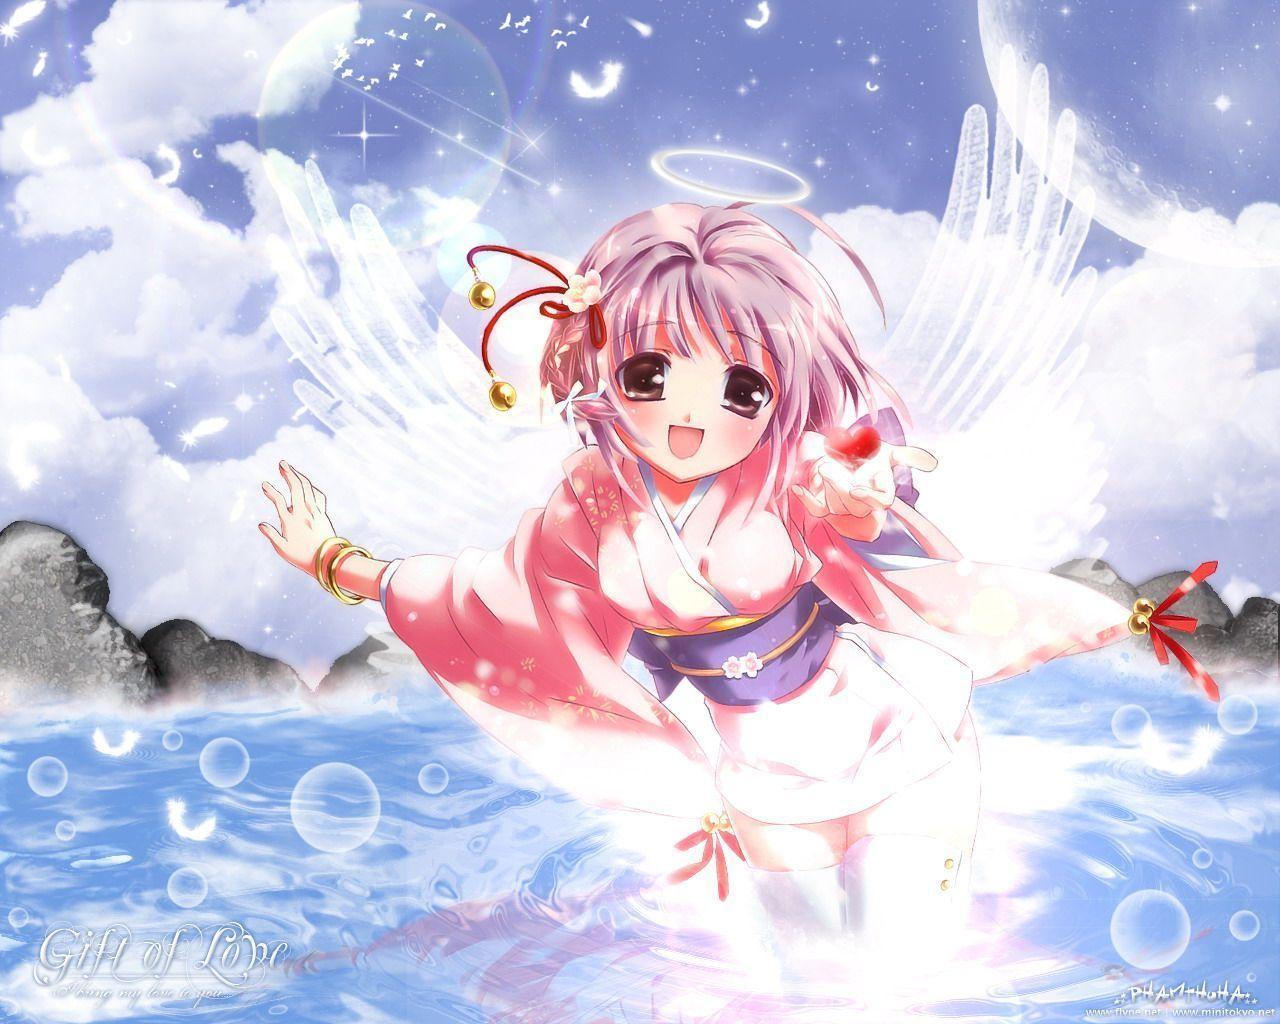 Wallpapers De Chicas Anime - Imagenes De Anime , HD Wallpaper & Backgrounds